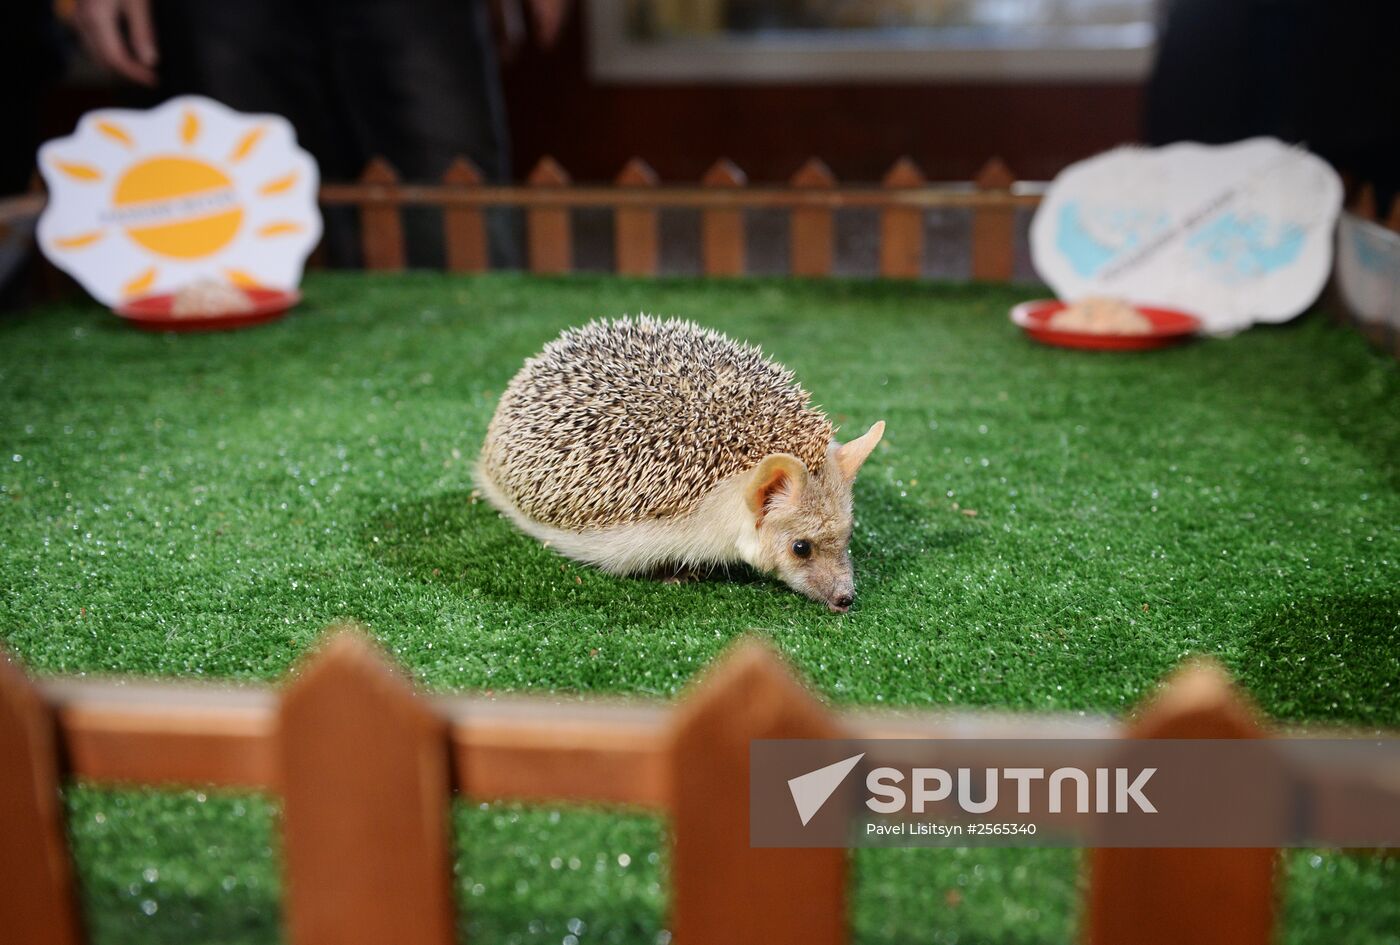 Hedgehog Pugovka predicts early spring